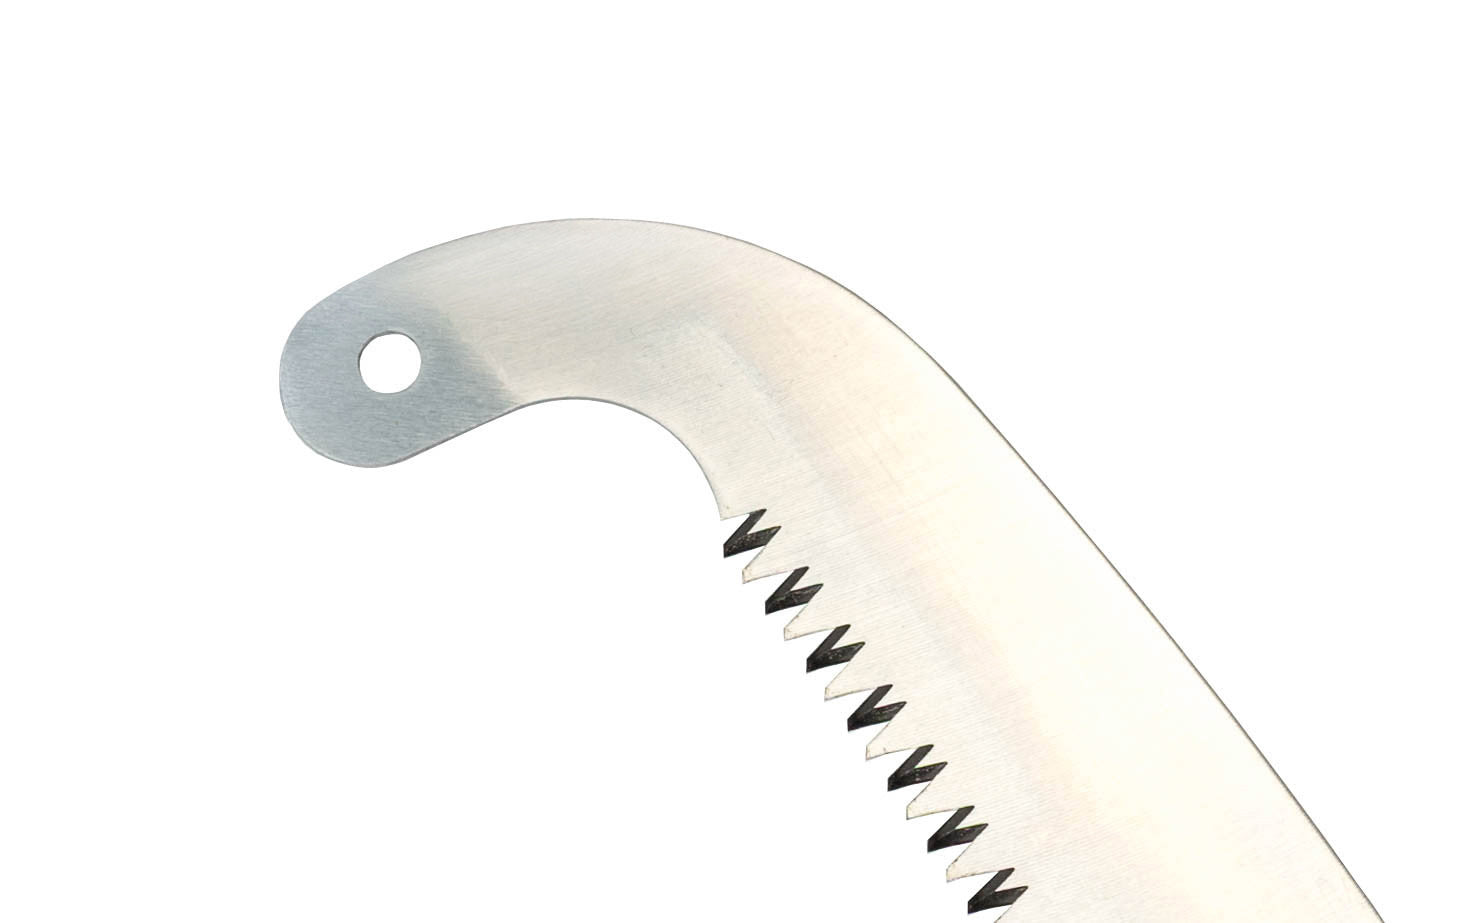 Fiskars Steel Curved Pruner Replacement Blade 